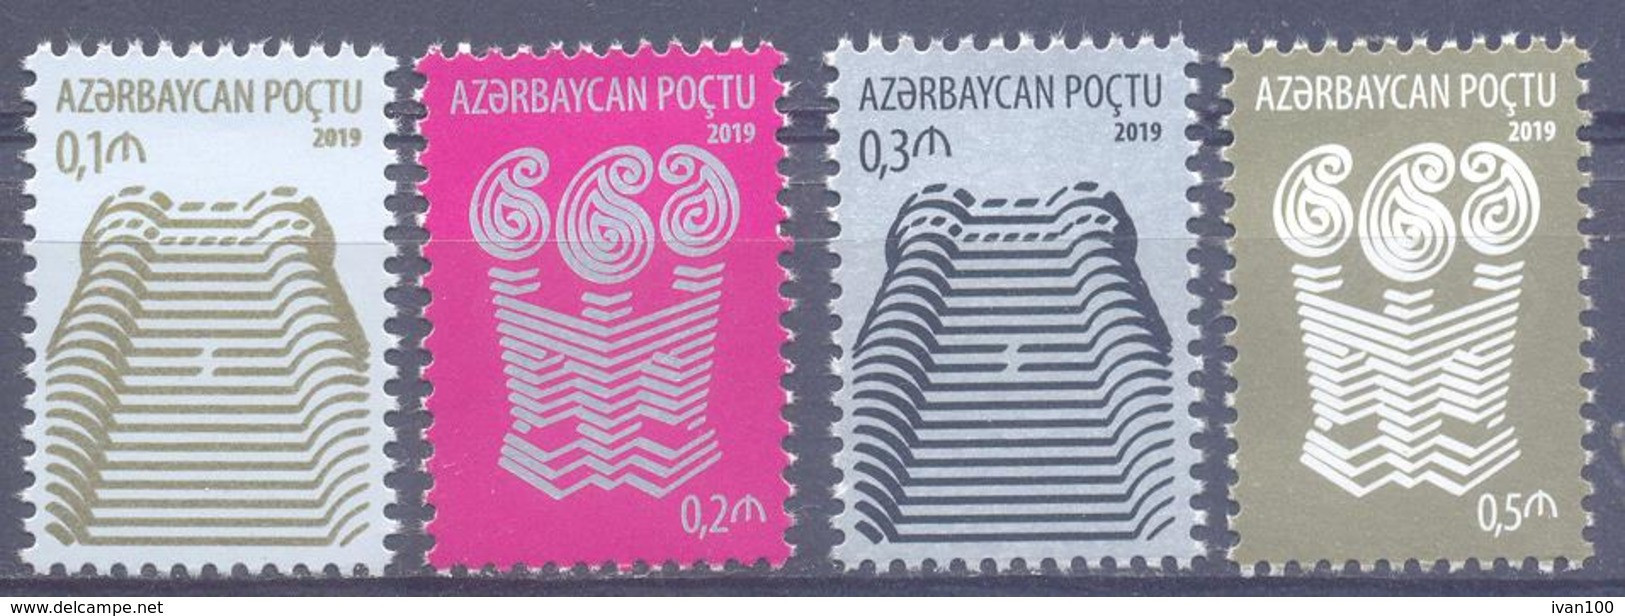 2019.Azerbaijan, Definitives, 4v, Mint/** - Azerbaijan